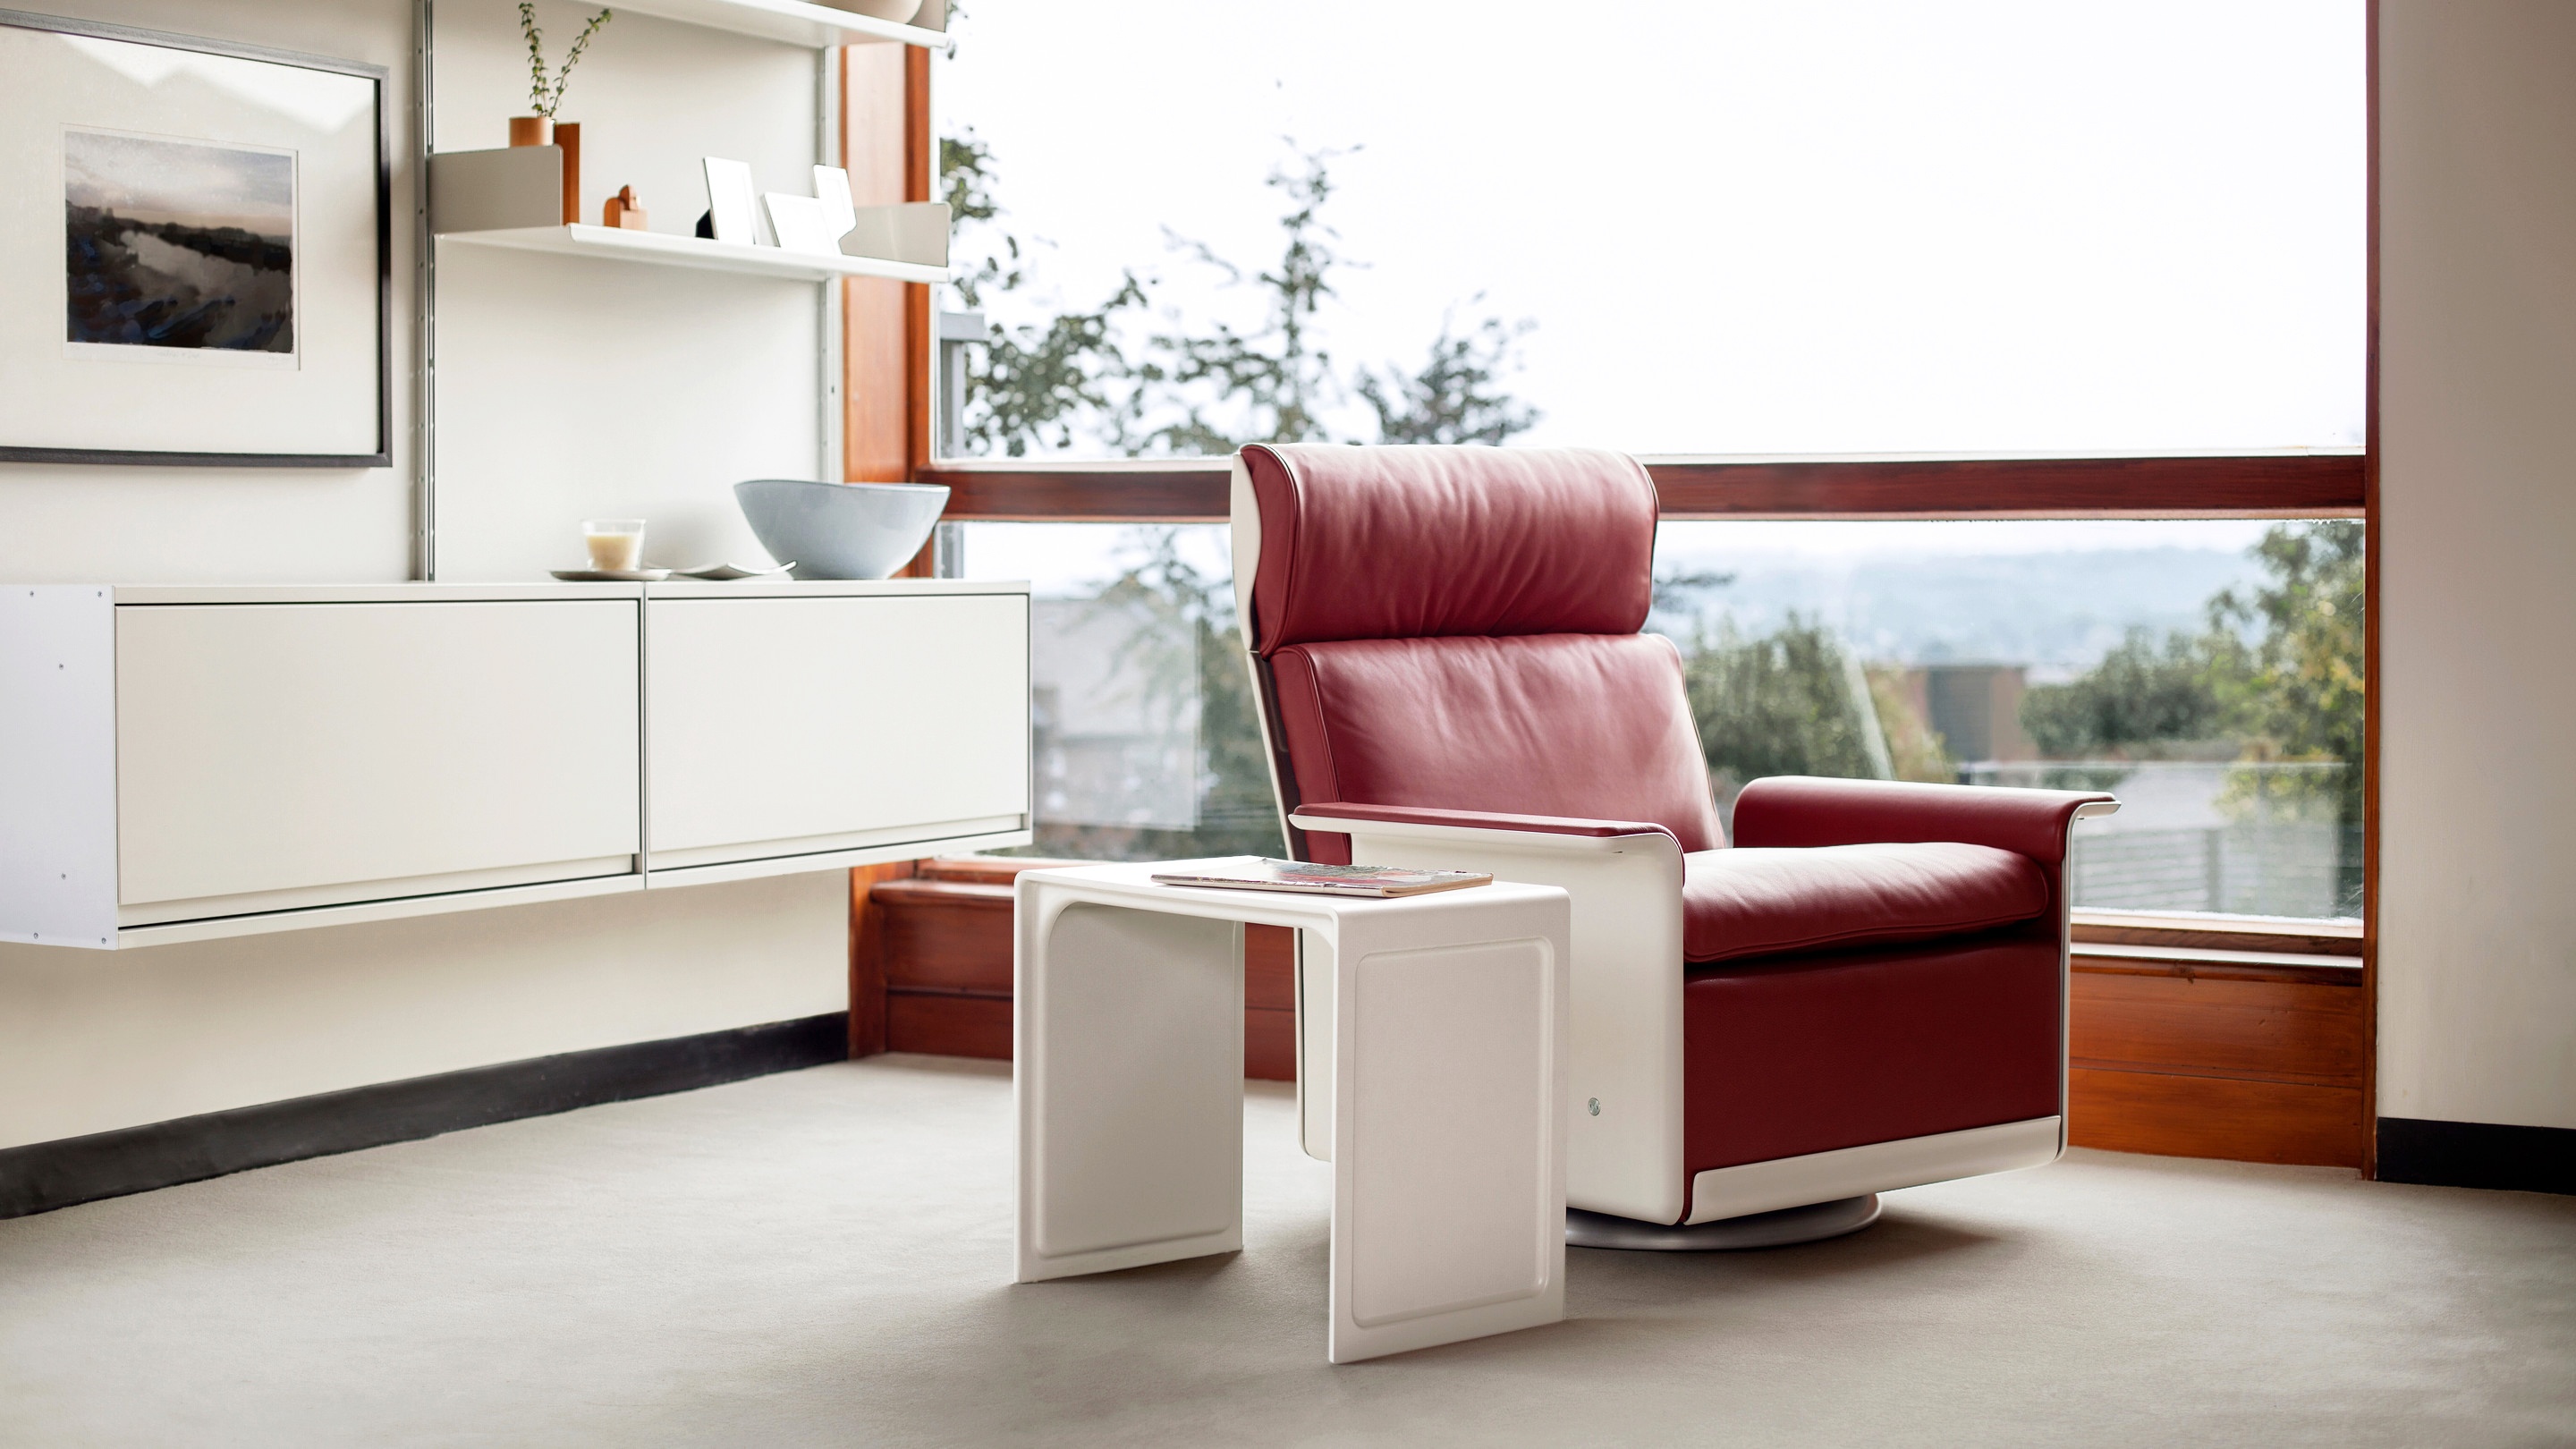 Armchair side table. Coffee, book, magazine. Vitsœ 621 nesting pair side table. Designer Dieter Rams.